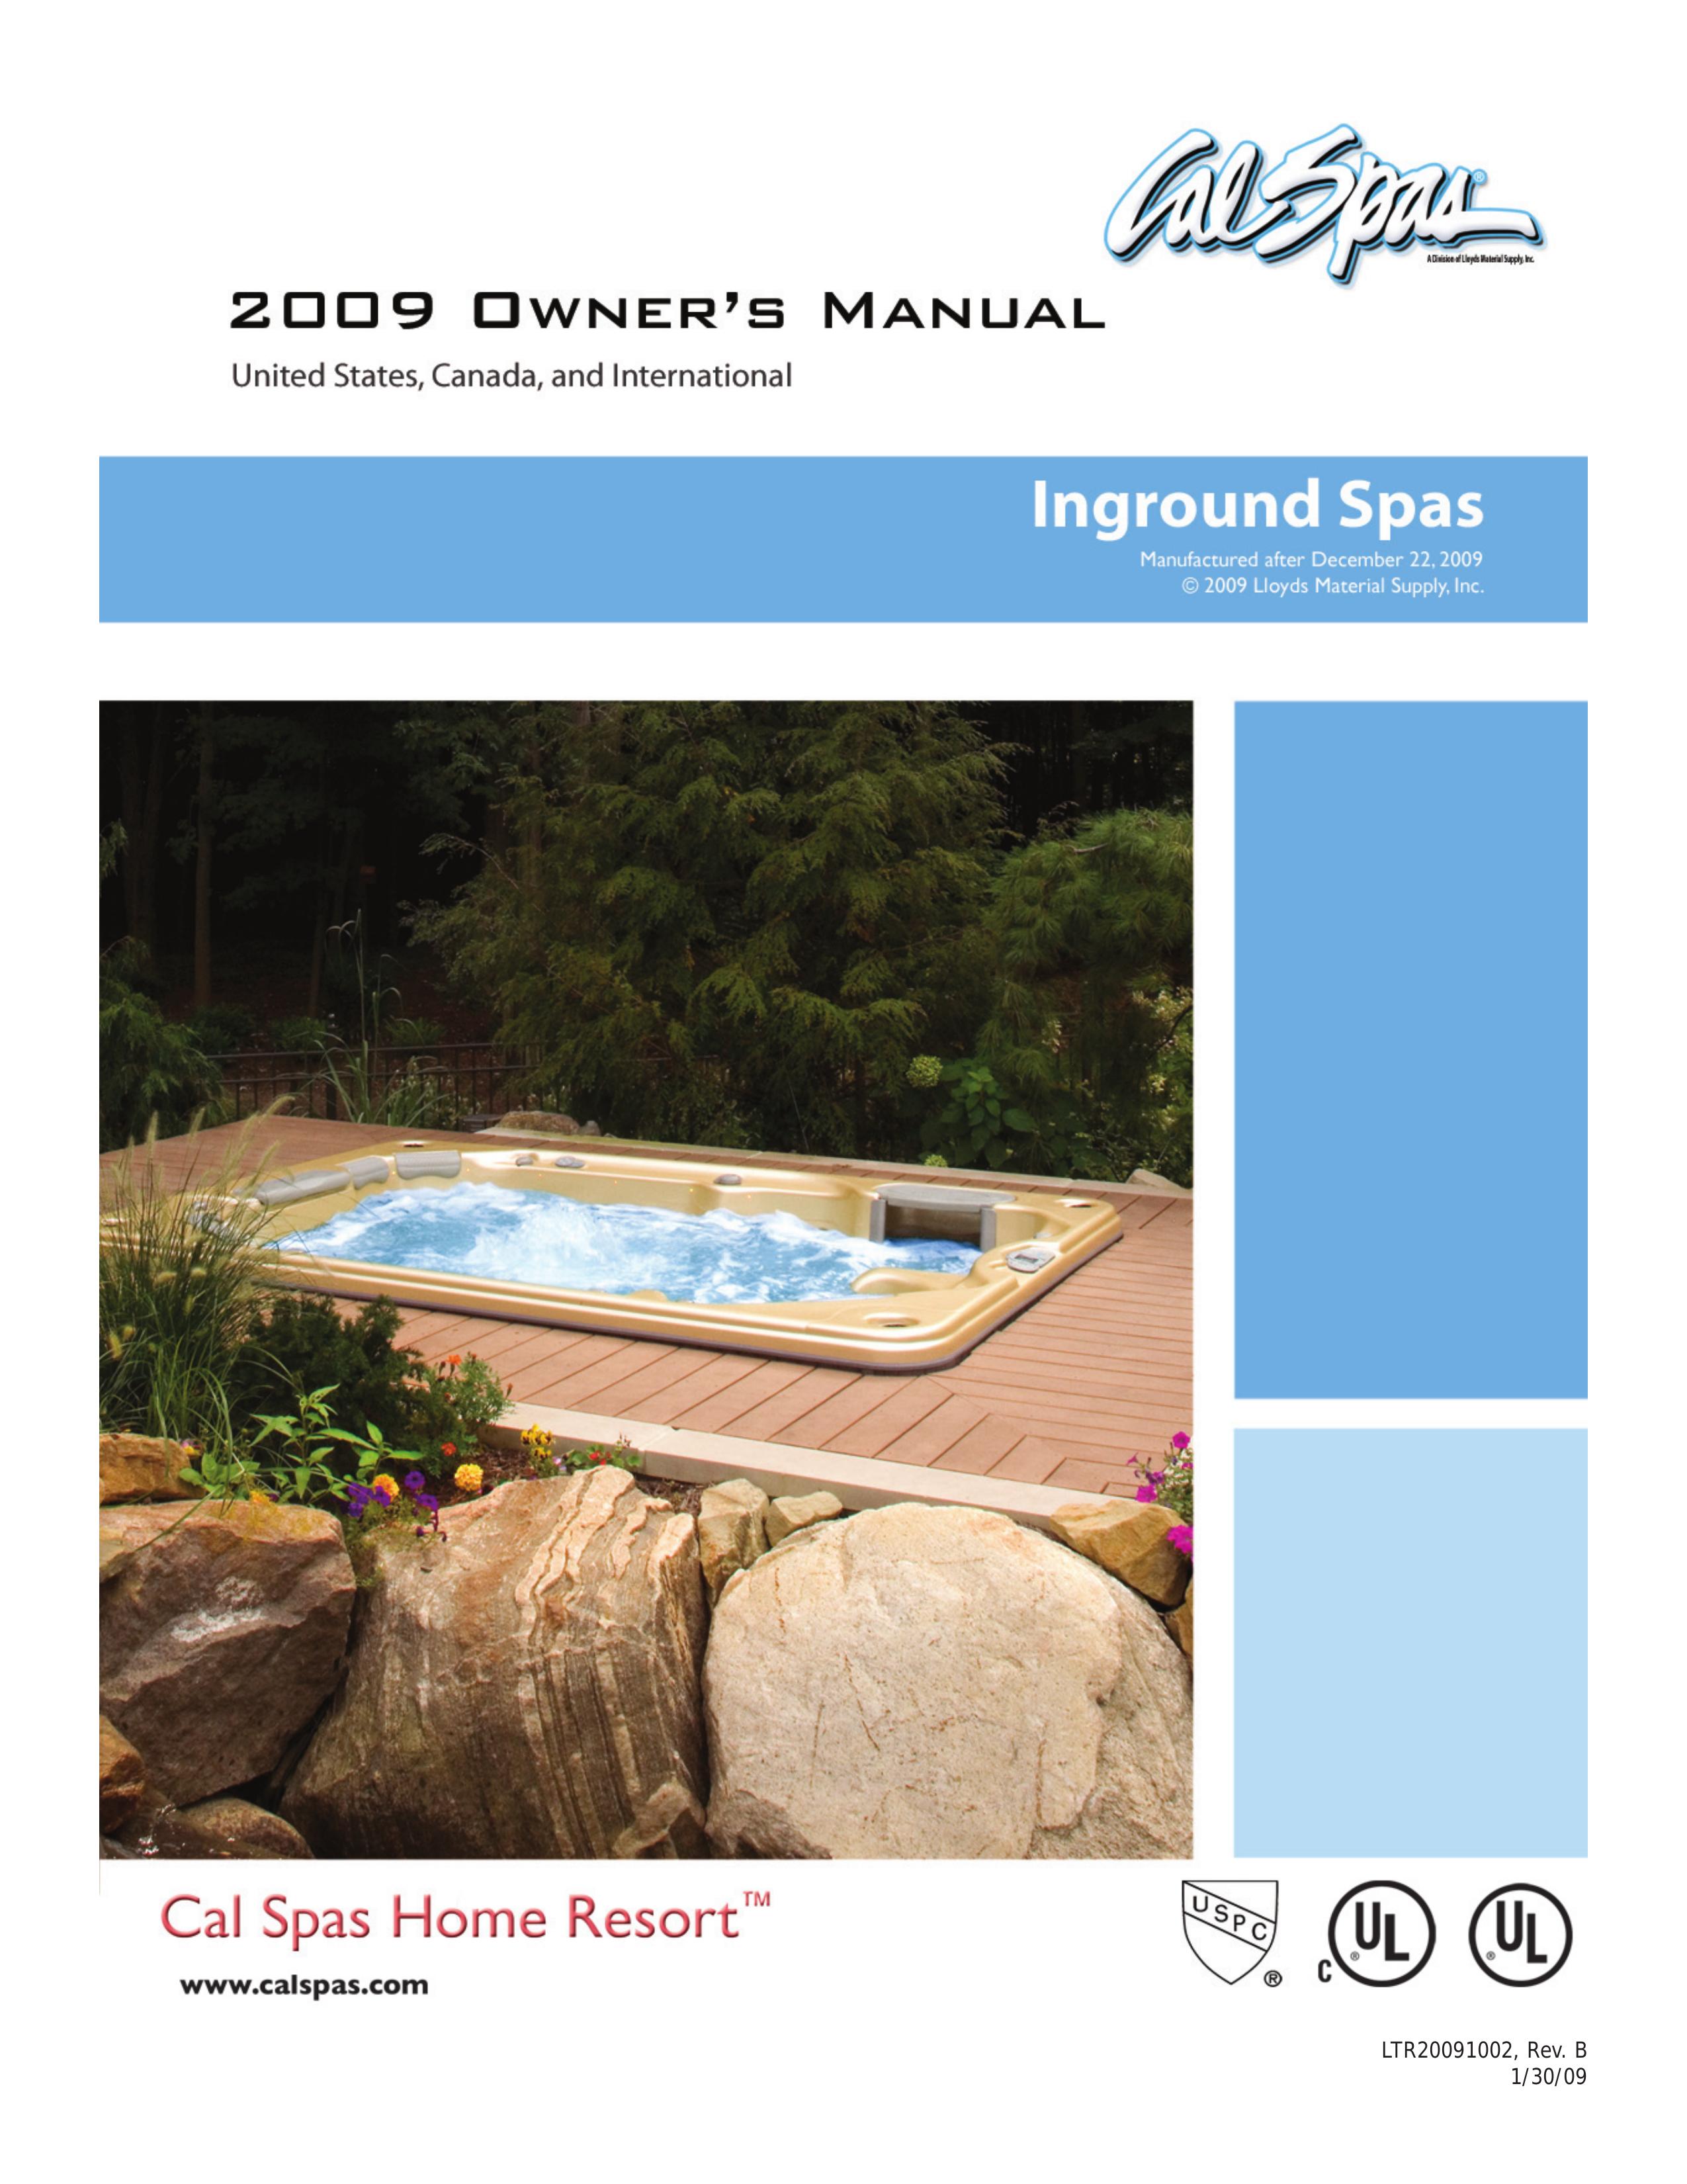 Cal Spas LTR20091002 Hot Tub User Manual